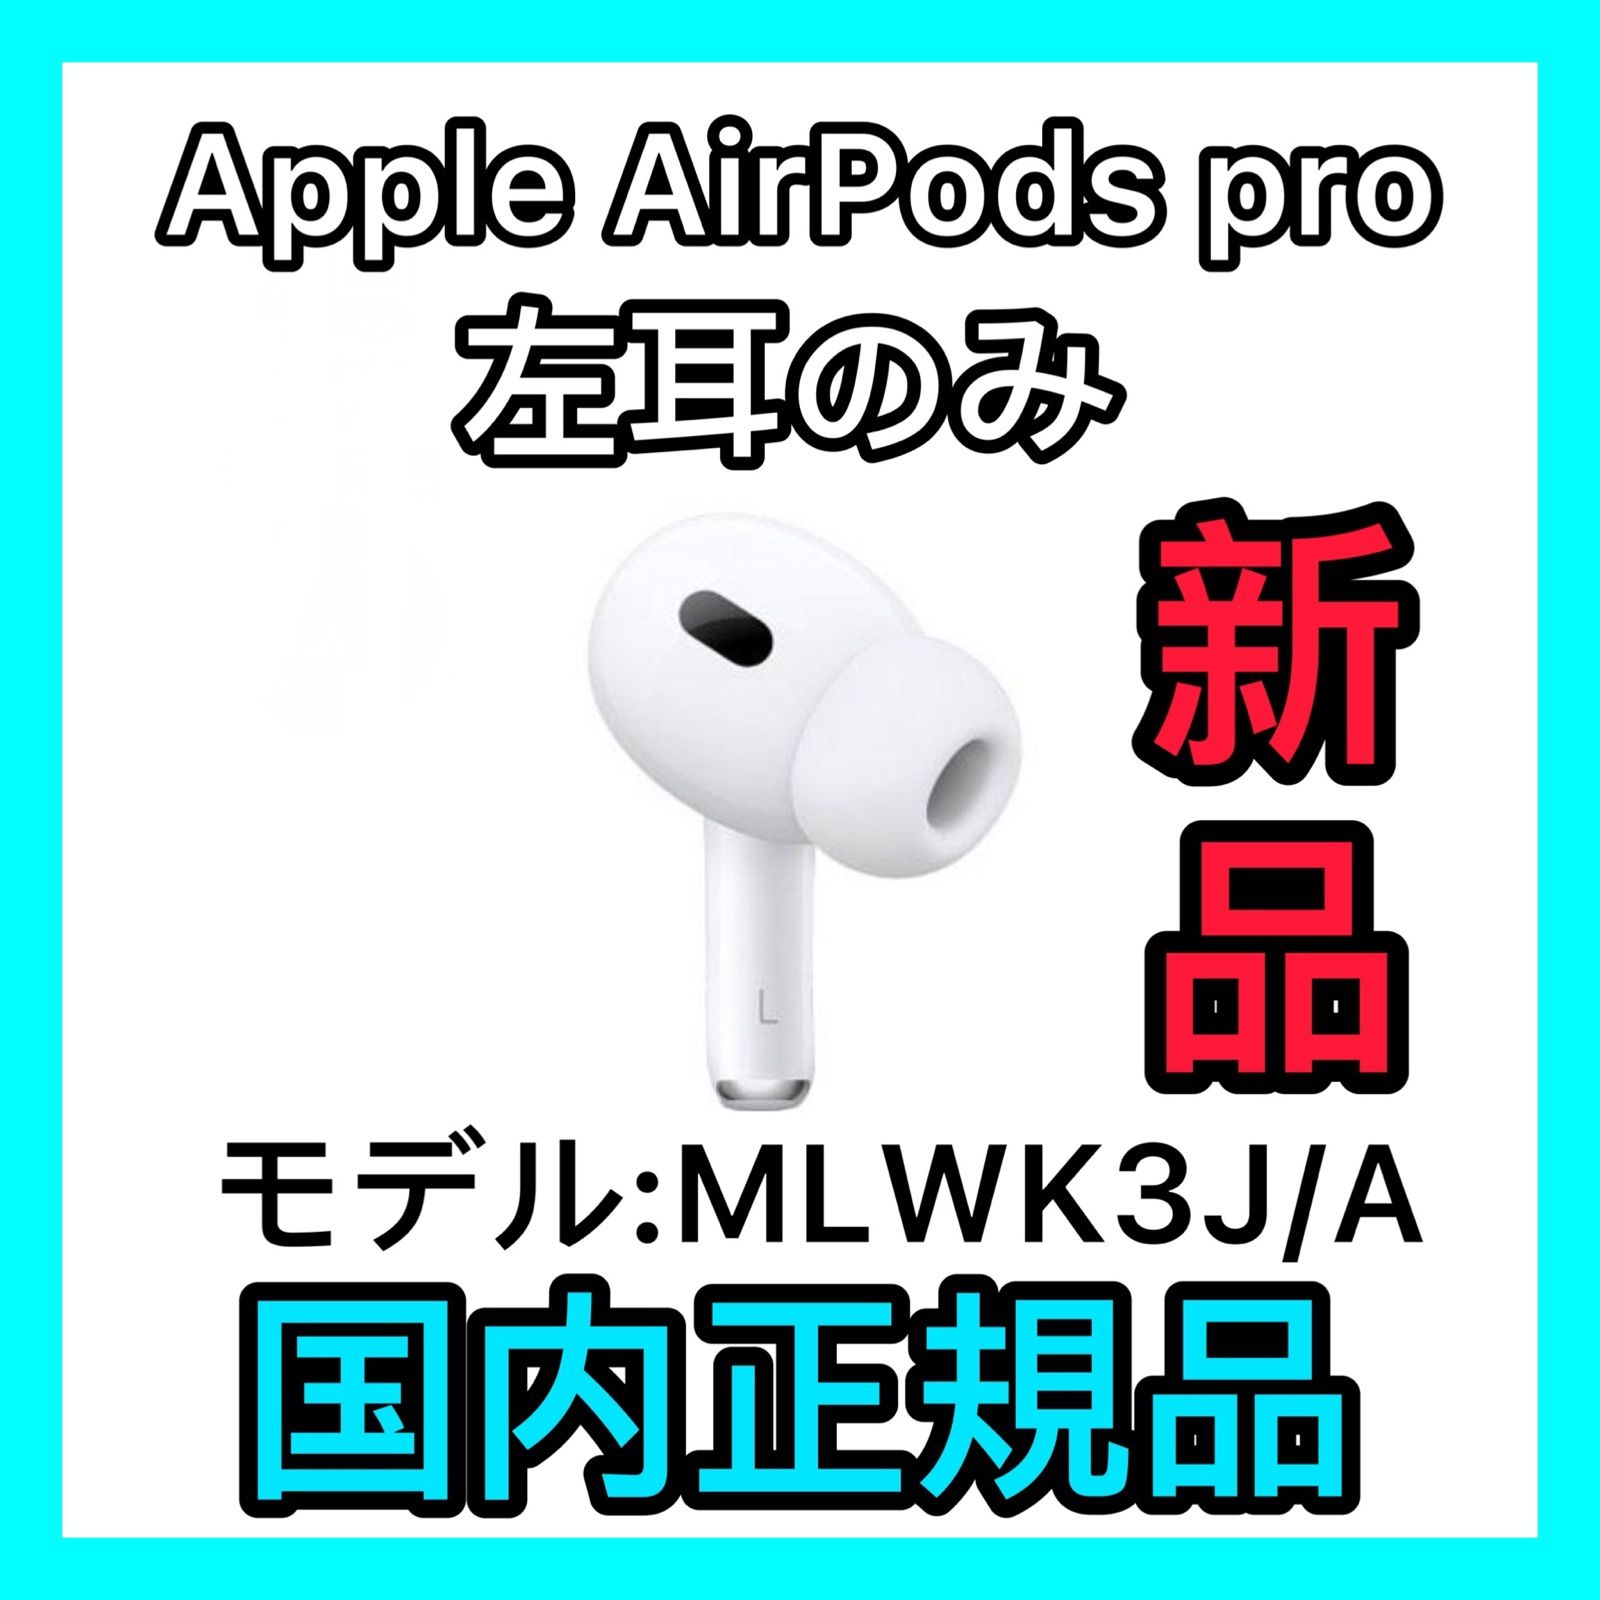 Apple AirPods Pro 左耳のみオーディオ機器 - ヘッドフォン